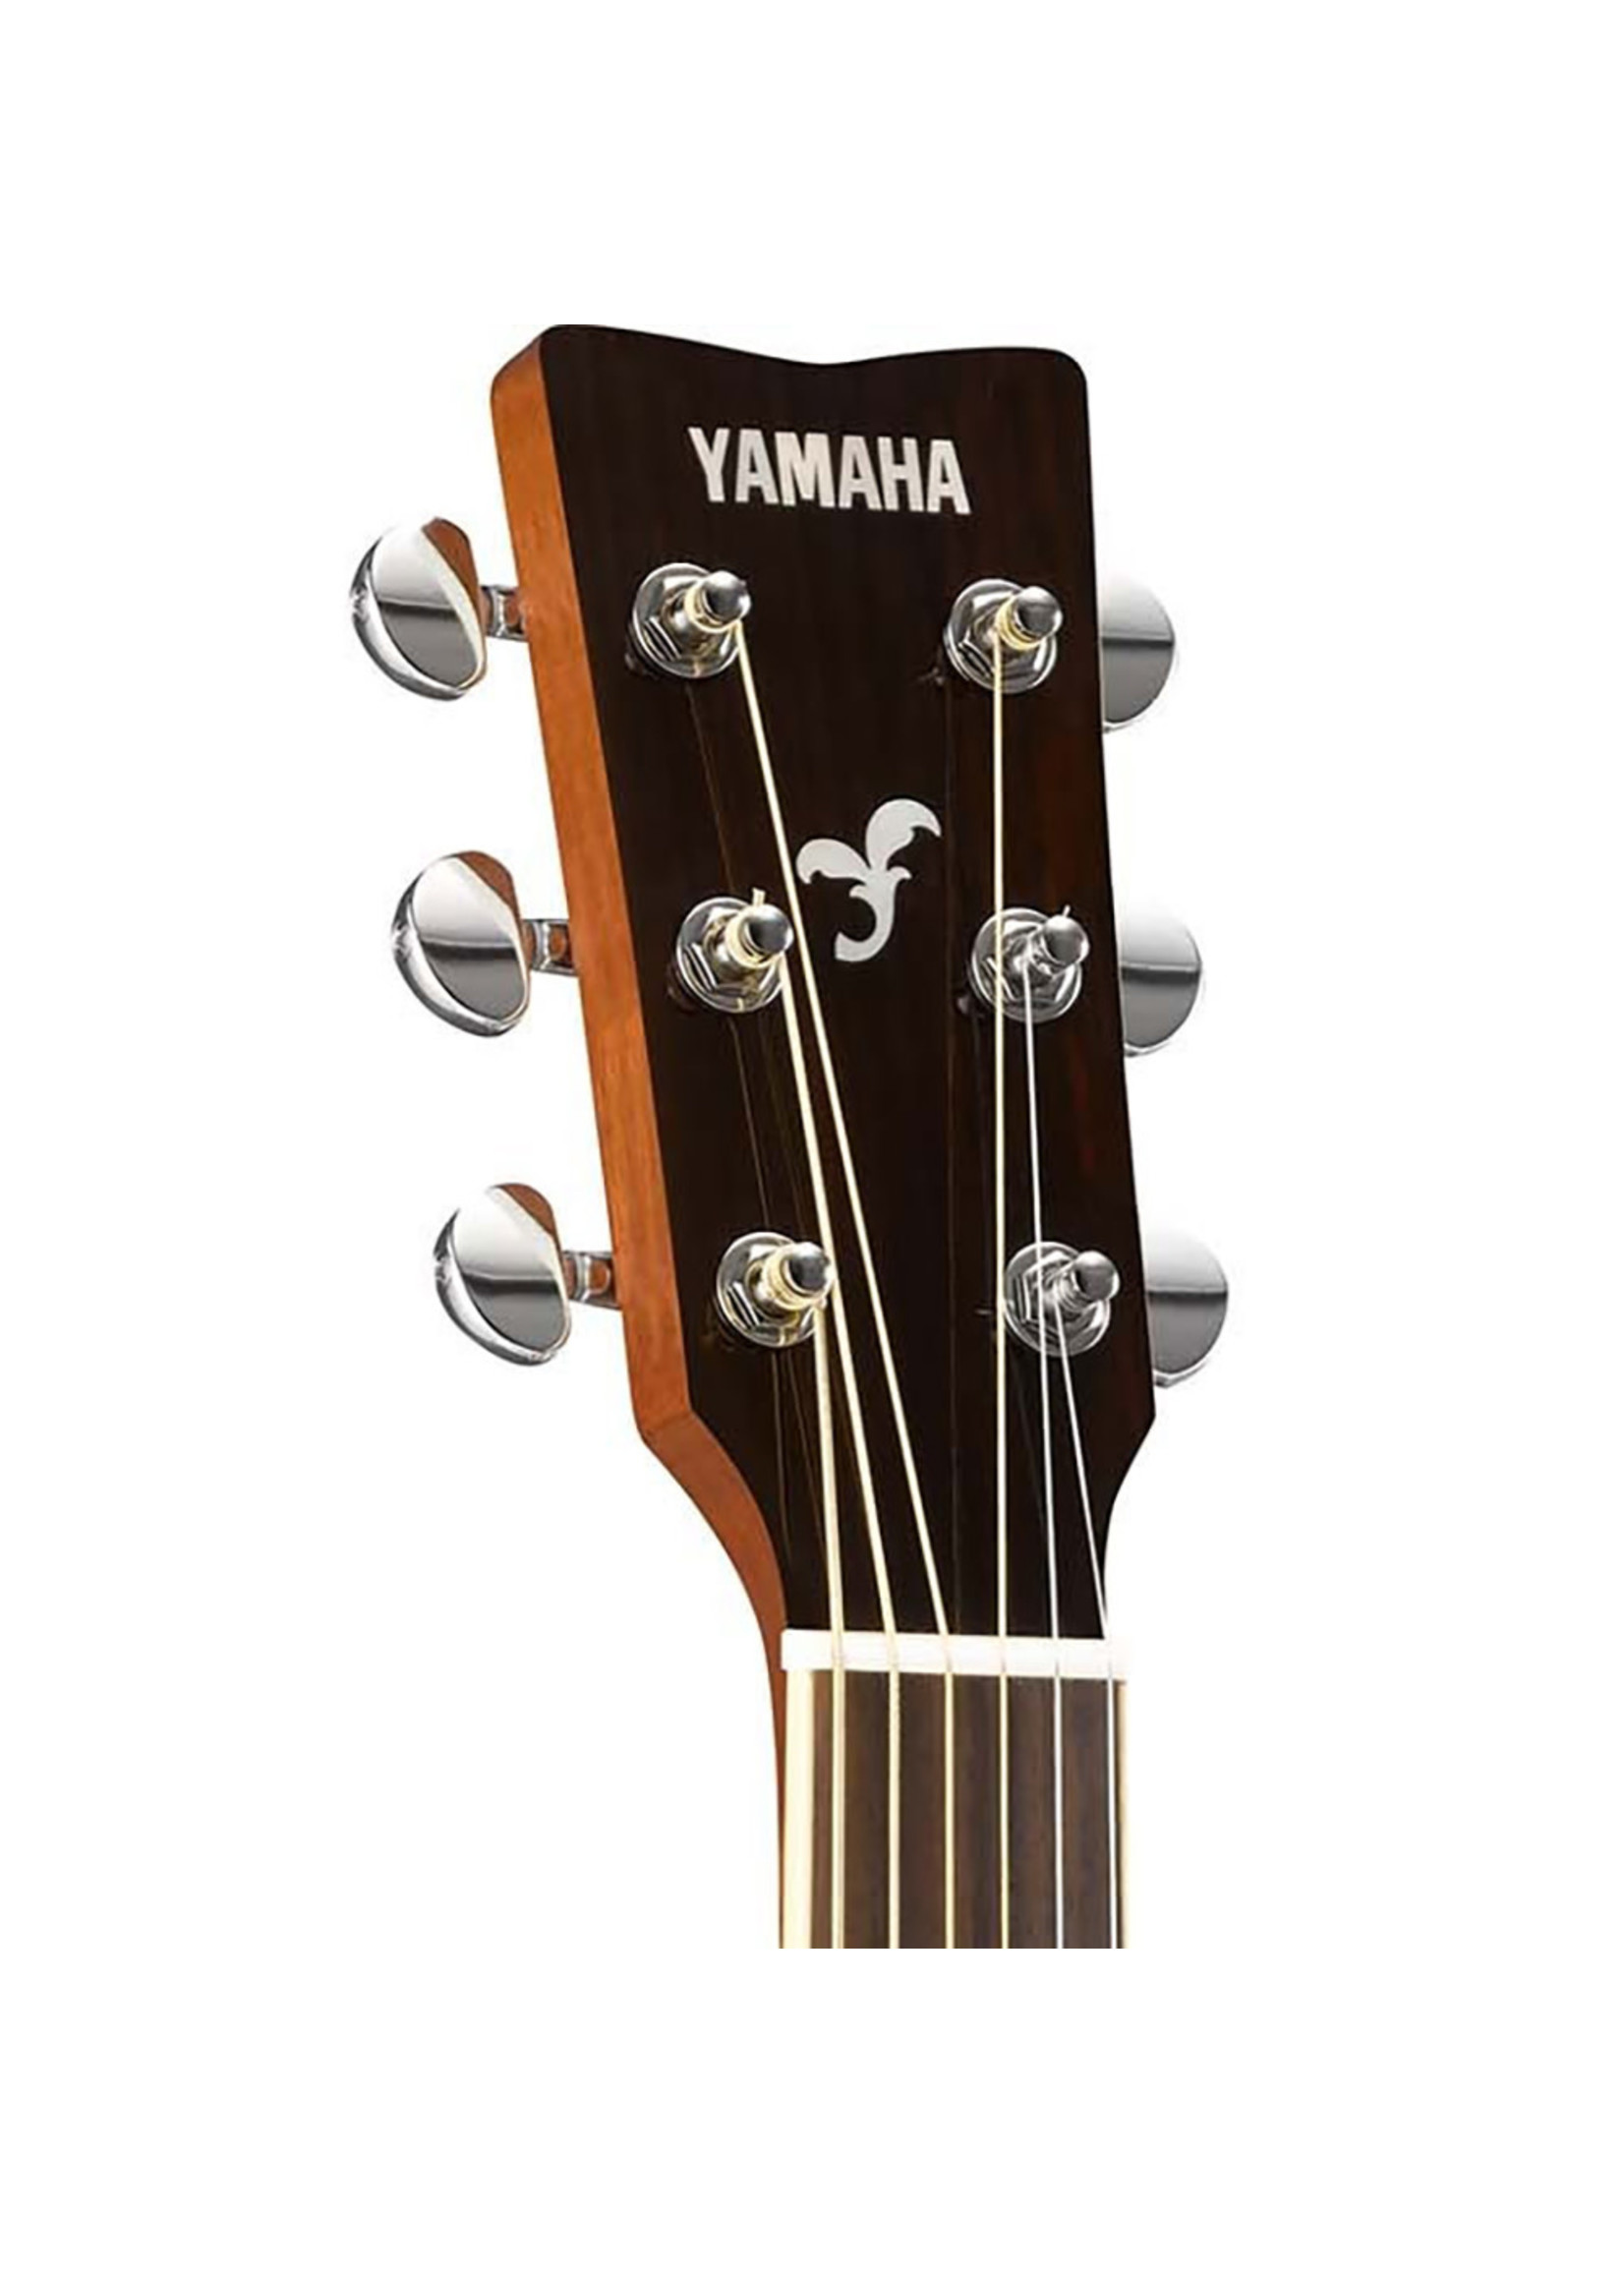 Yamaha Yamaha FSX820C Small Body Acoustic-Electric Guitar Natural